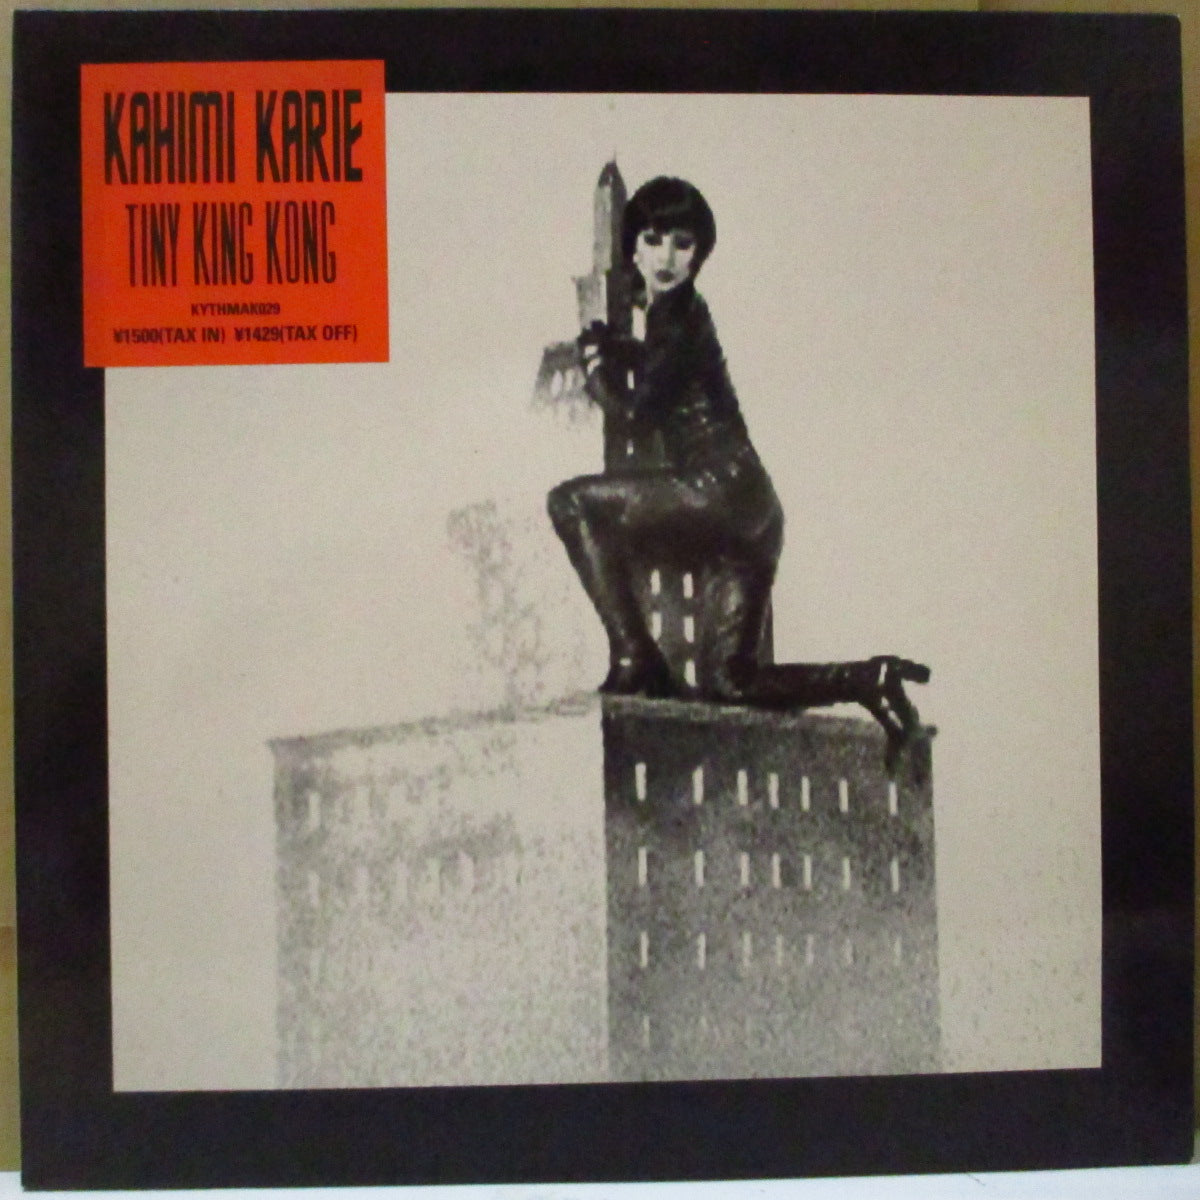 KAHIMI KARIE (カヒミ・カリィ) - Tiny King Kong (Japan オリジナル 12